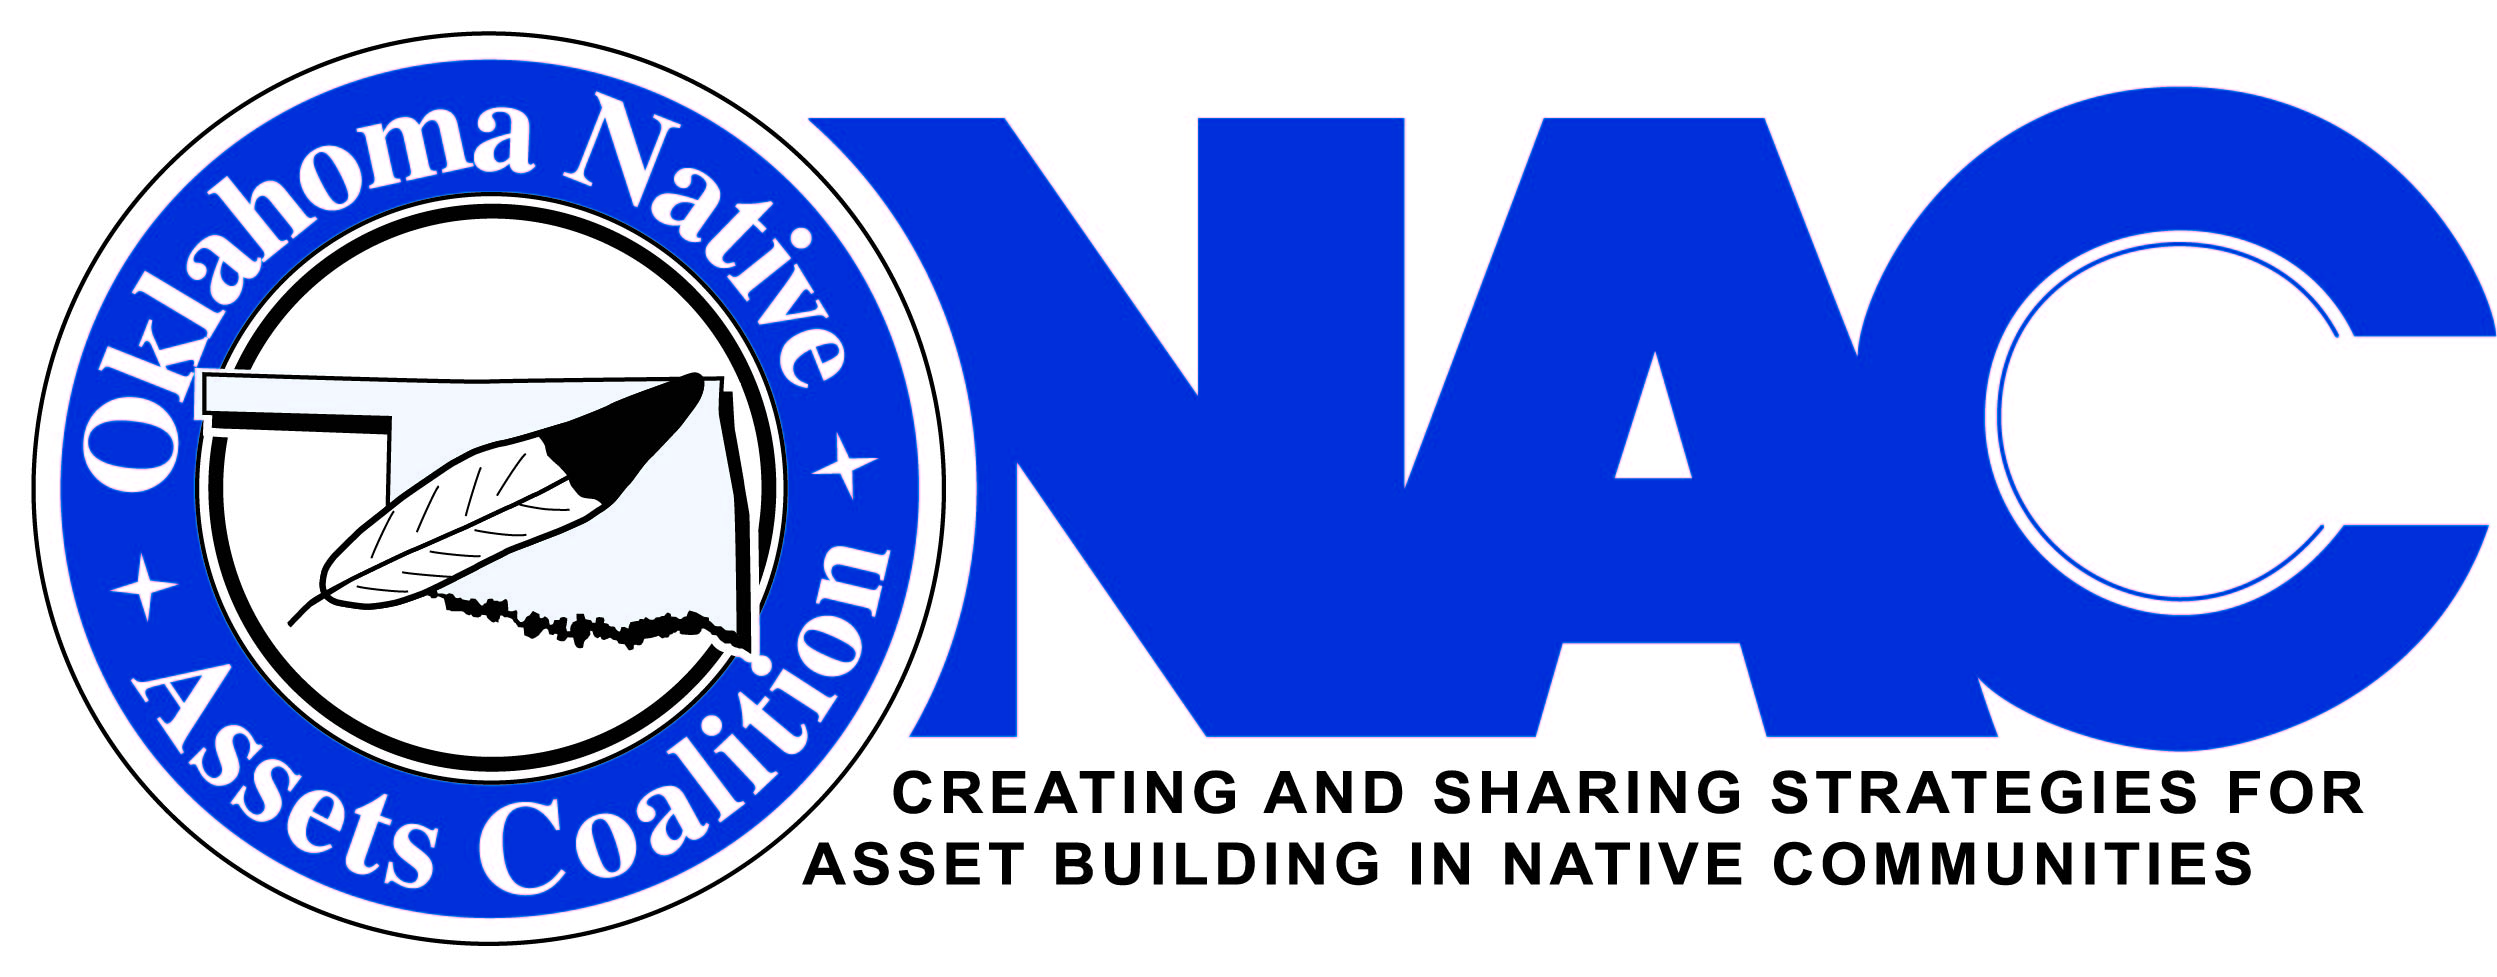 Oklahoma Native Assets Coalition (ONAC) logo